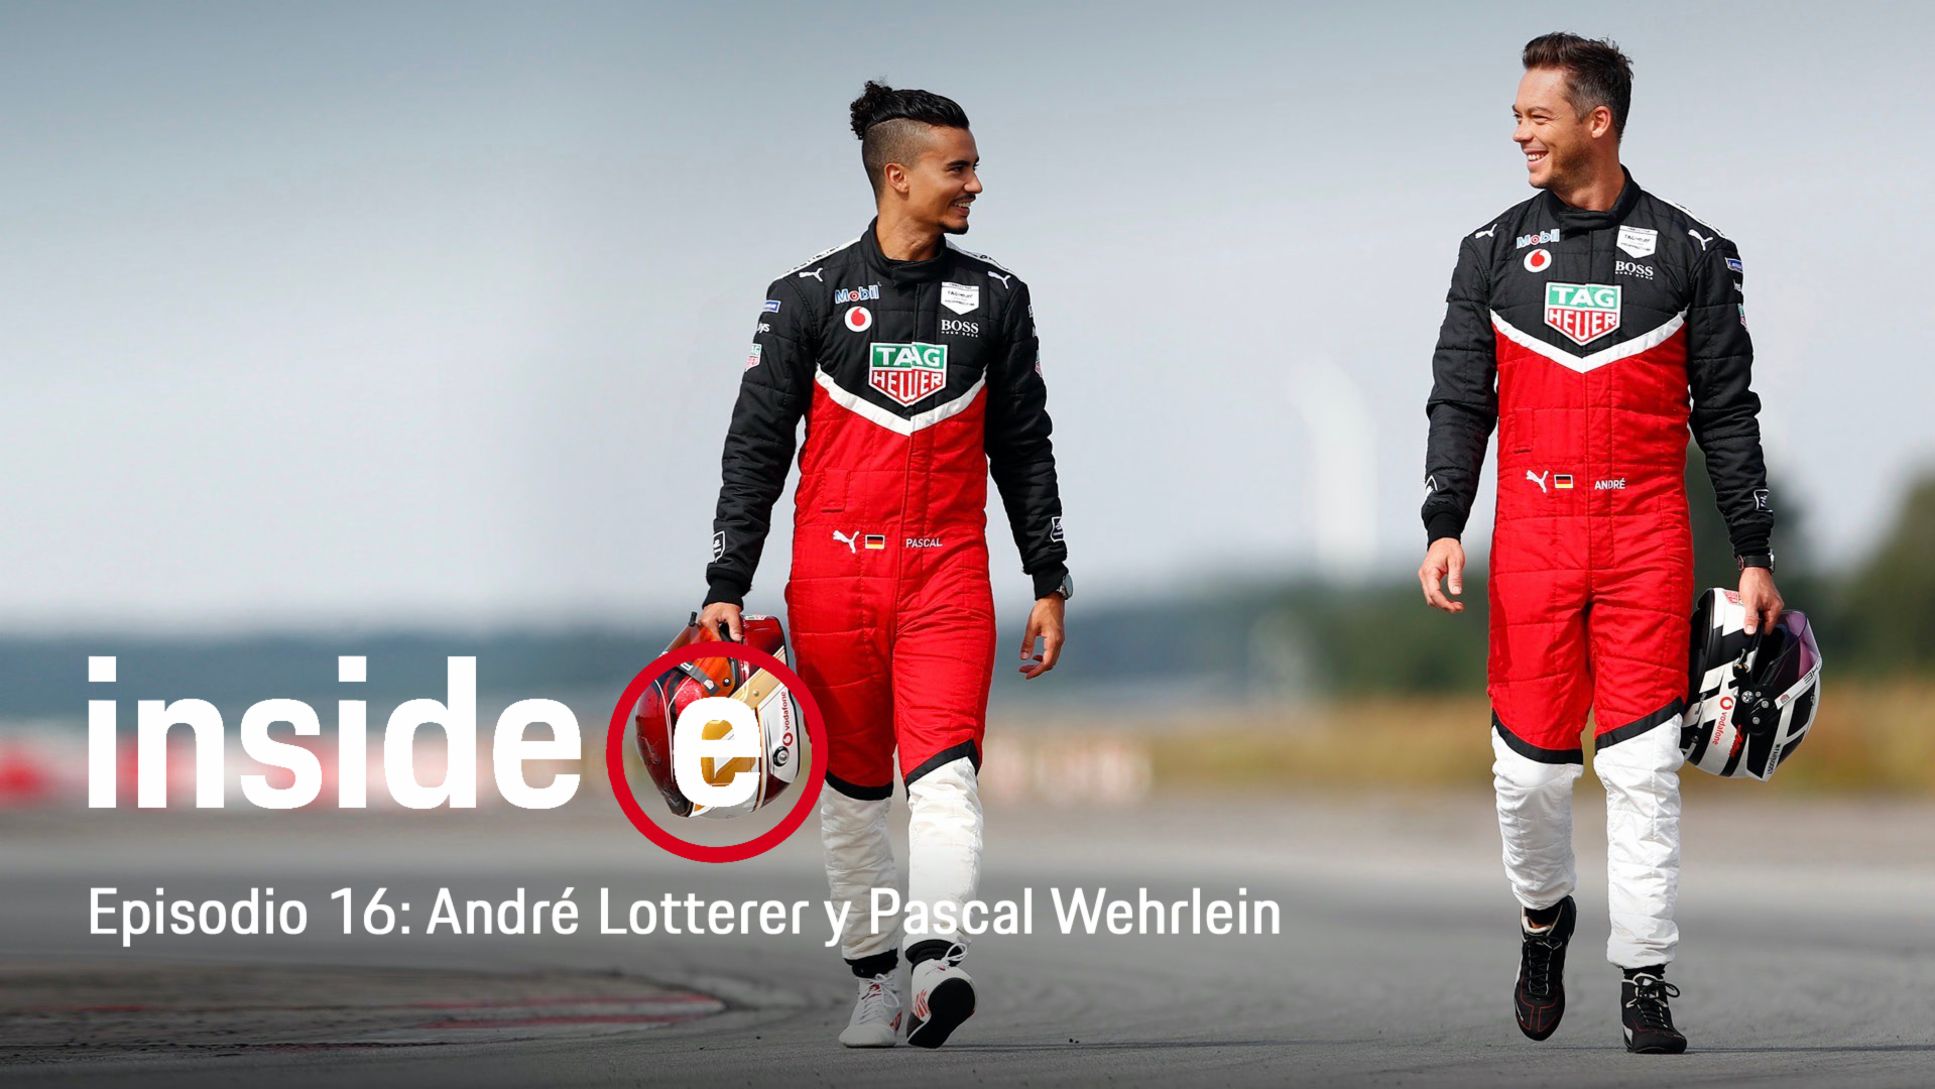 Podcast “Inside E”, episodio 16 con André Lotterer y Pascal Wehrlein, 2020, Porsche AG